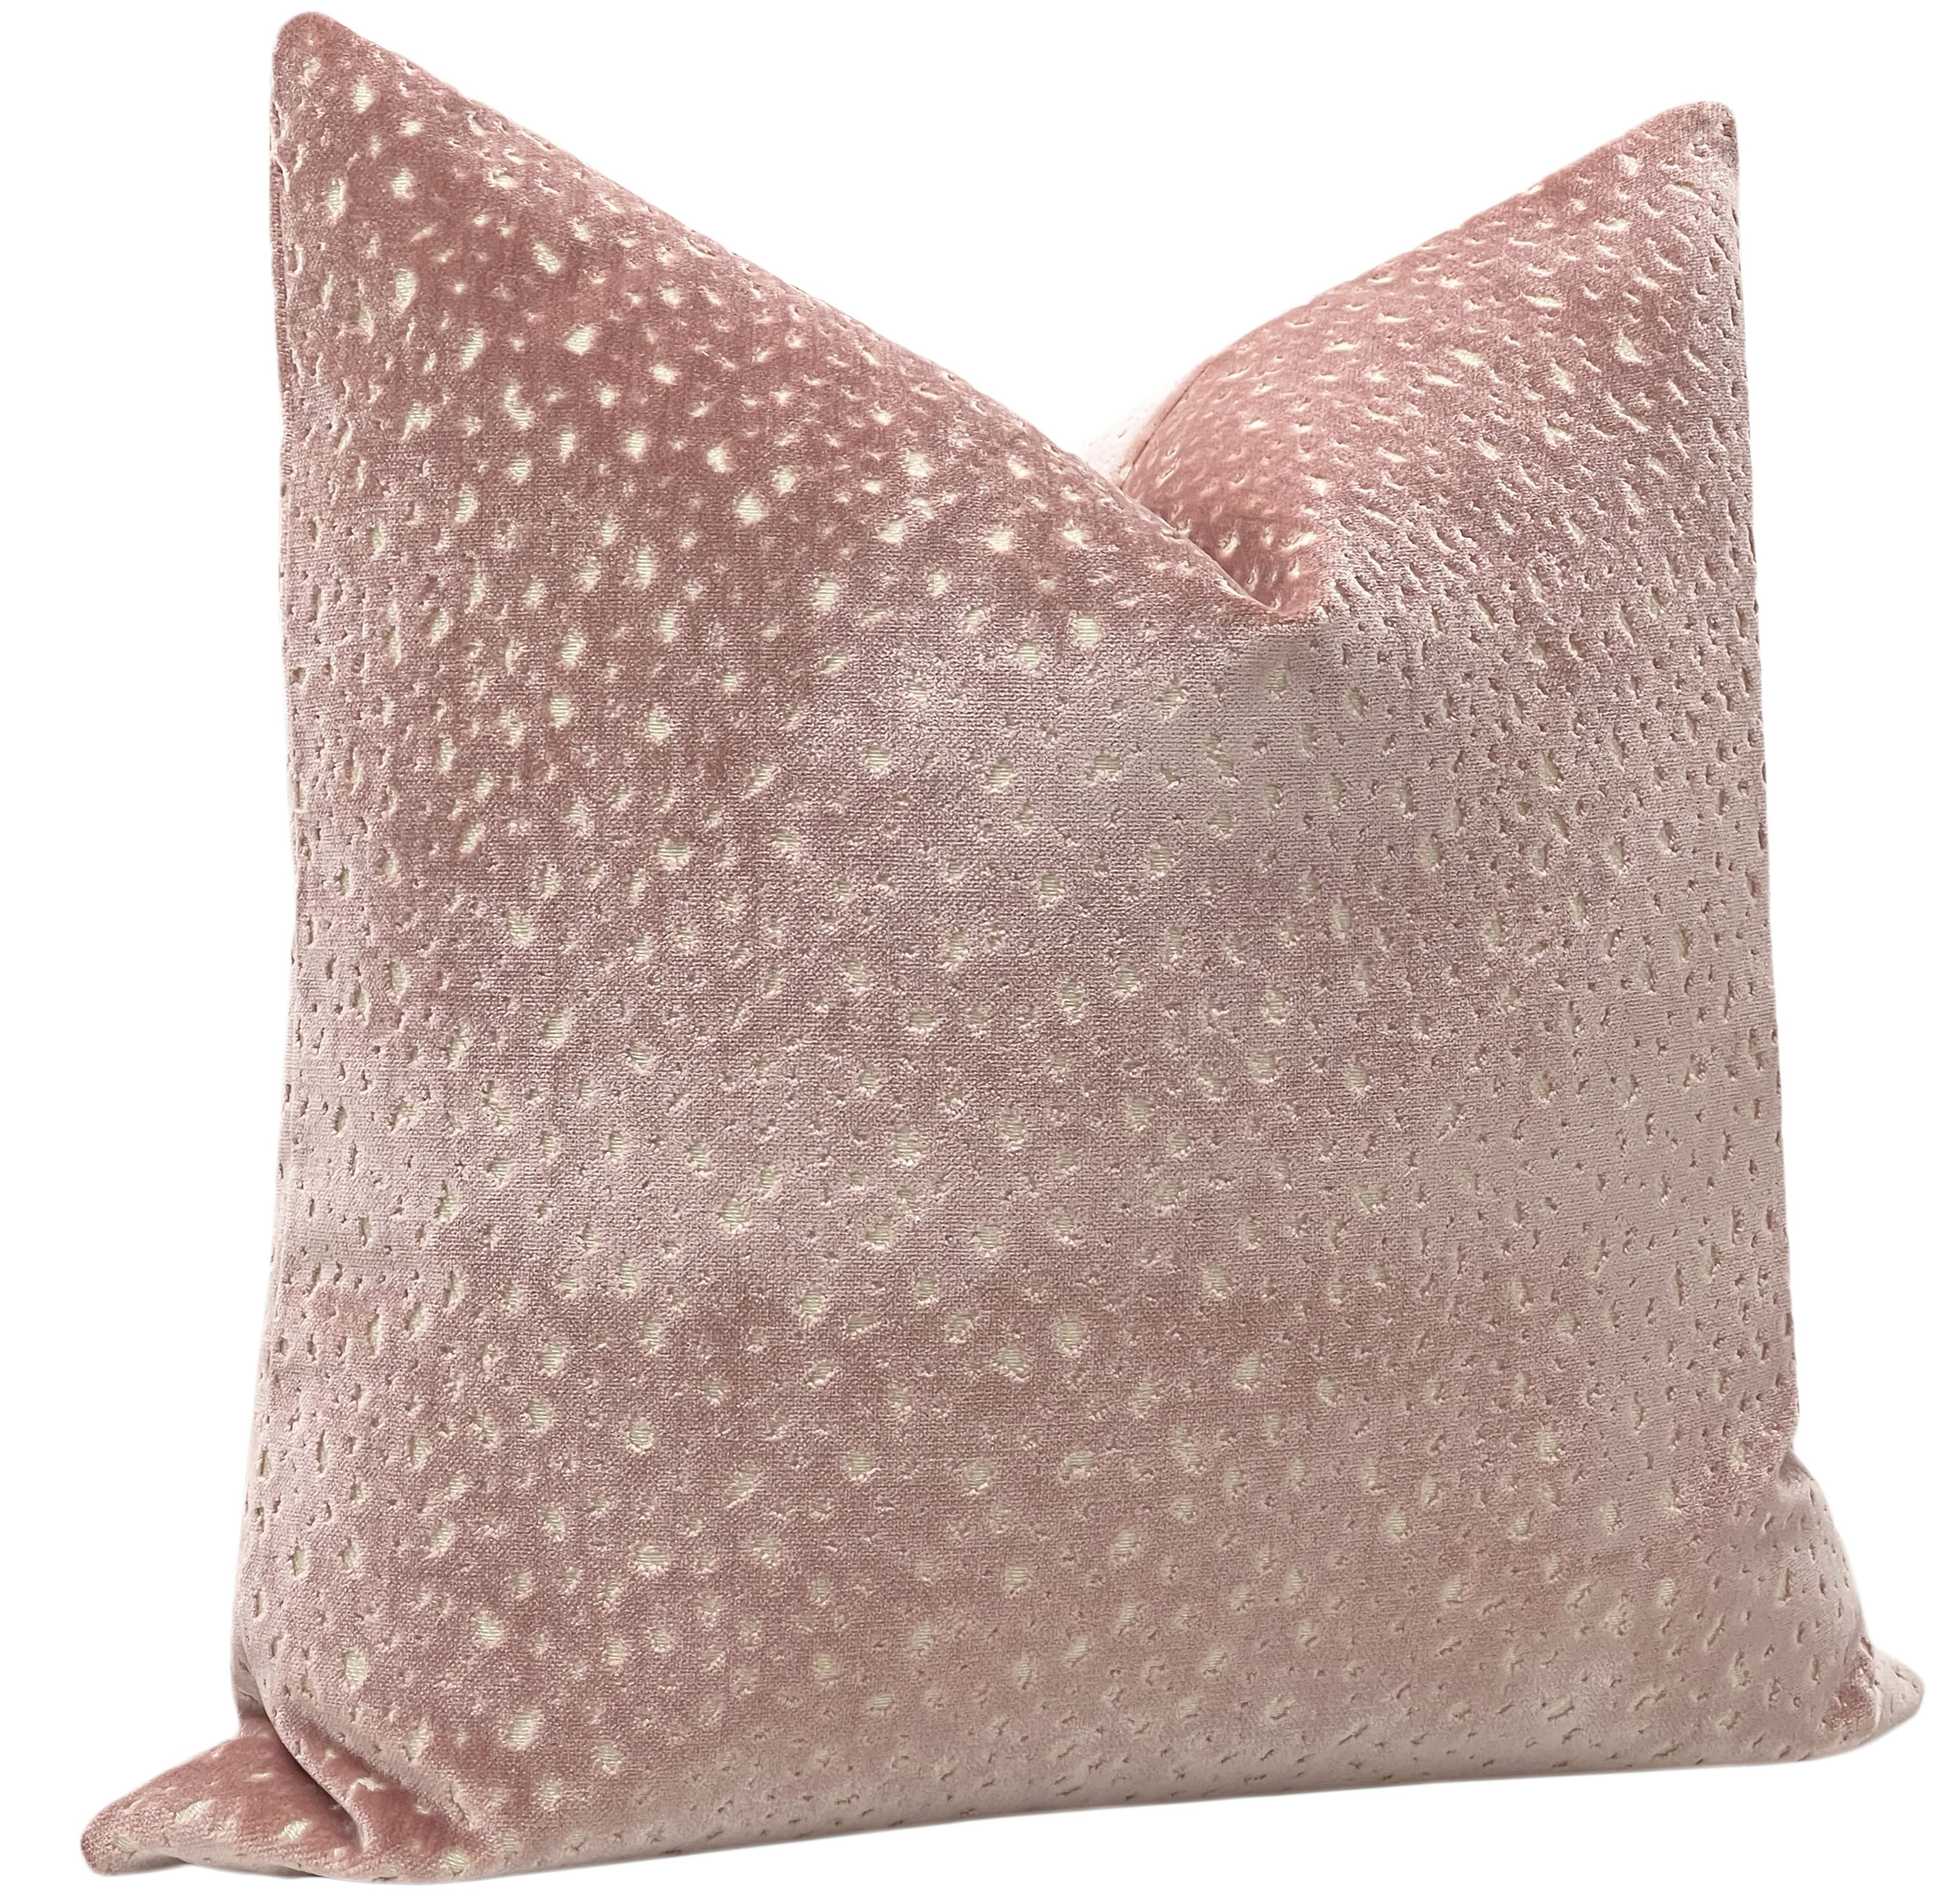 Antelope Cut Velvet Pillow Cover, Pink Peony, 18" x 18" - Image 1